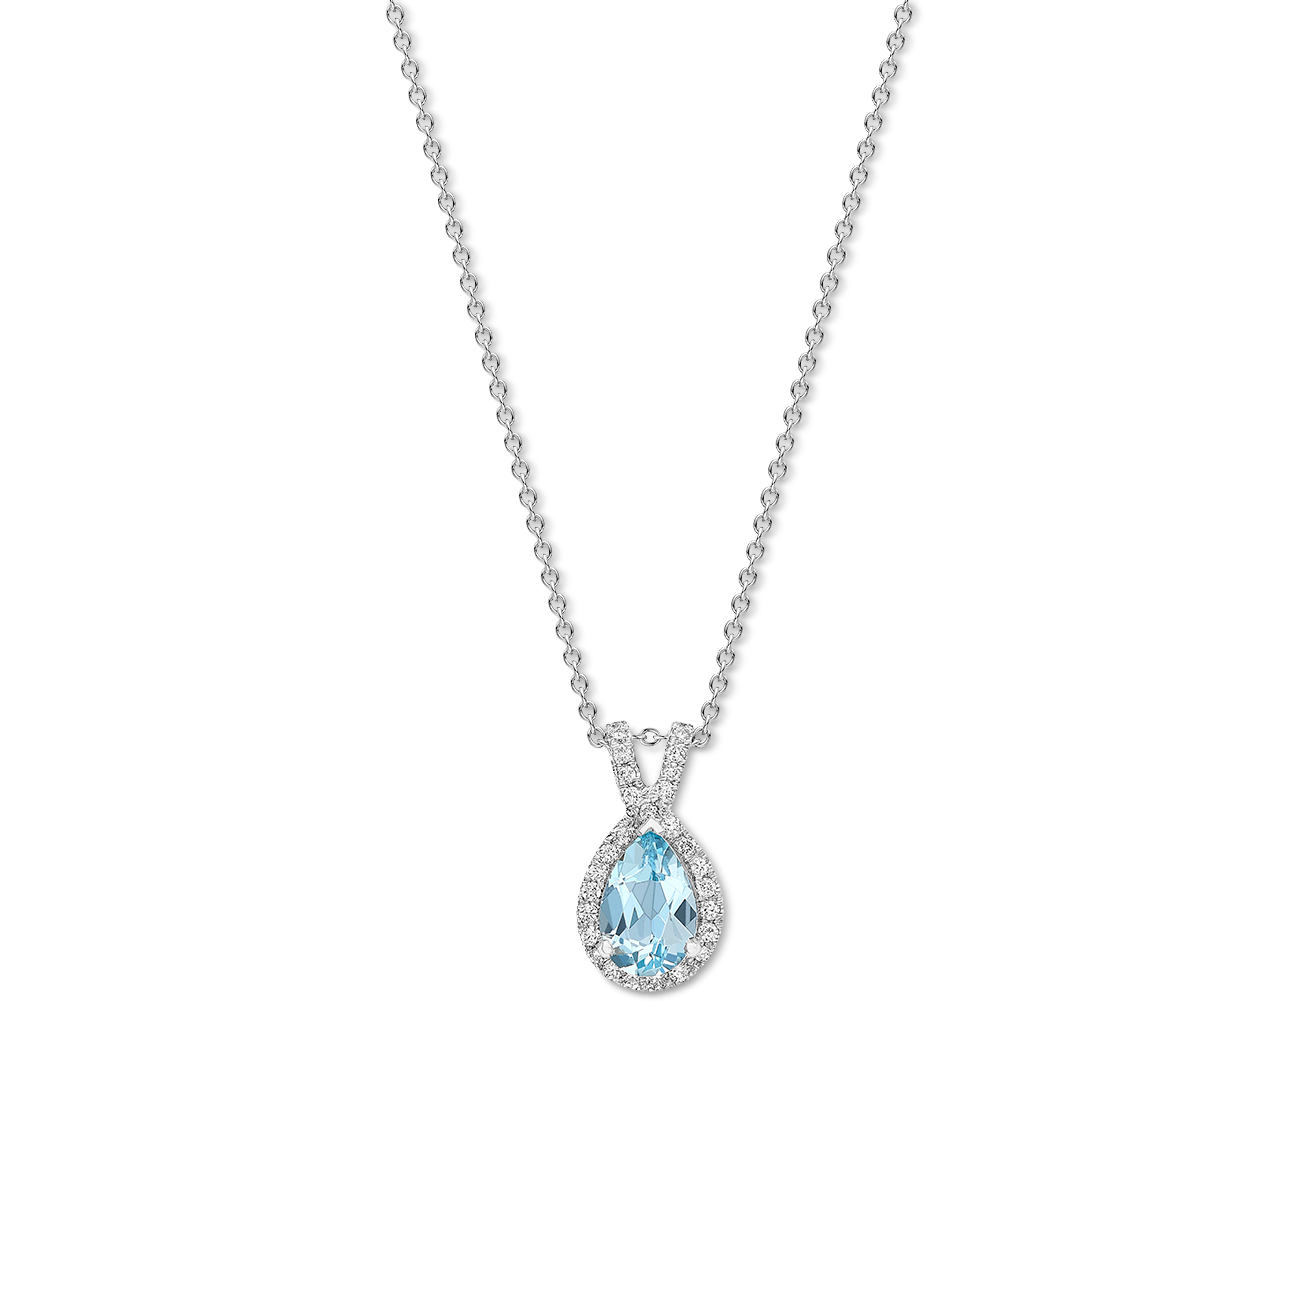 Drop shape aquamarine and diamond pendant